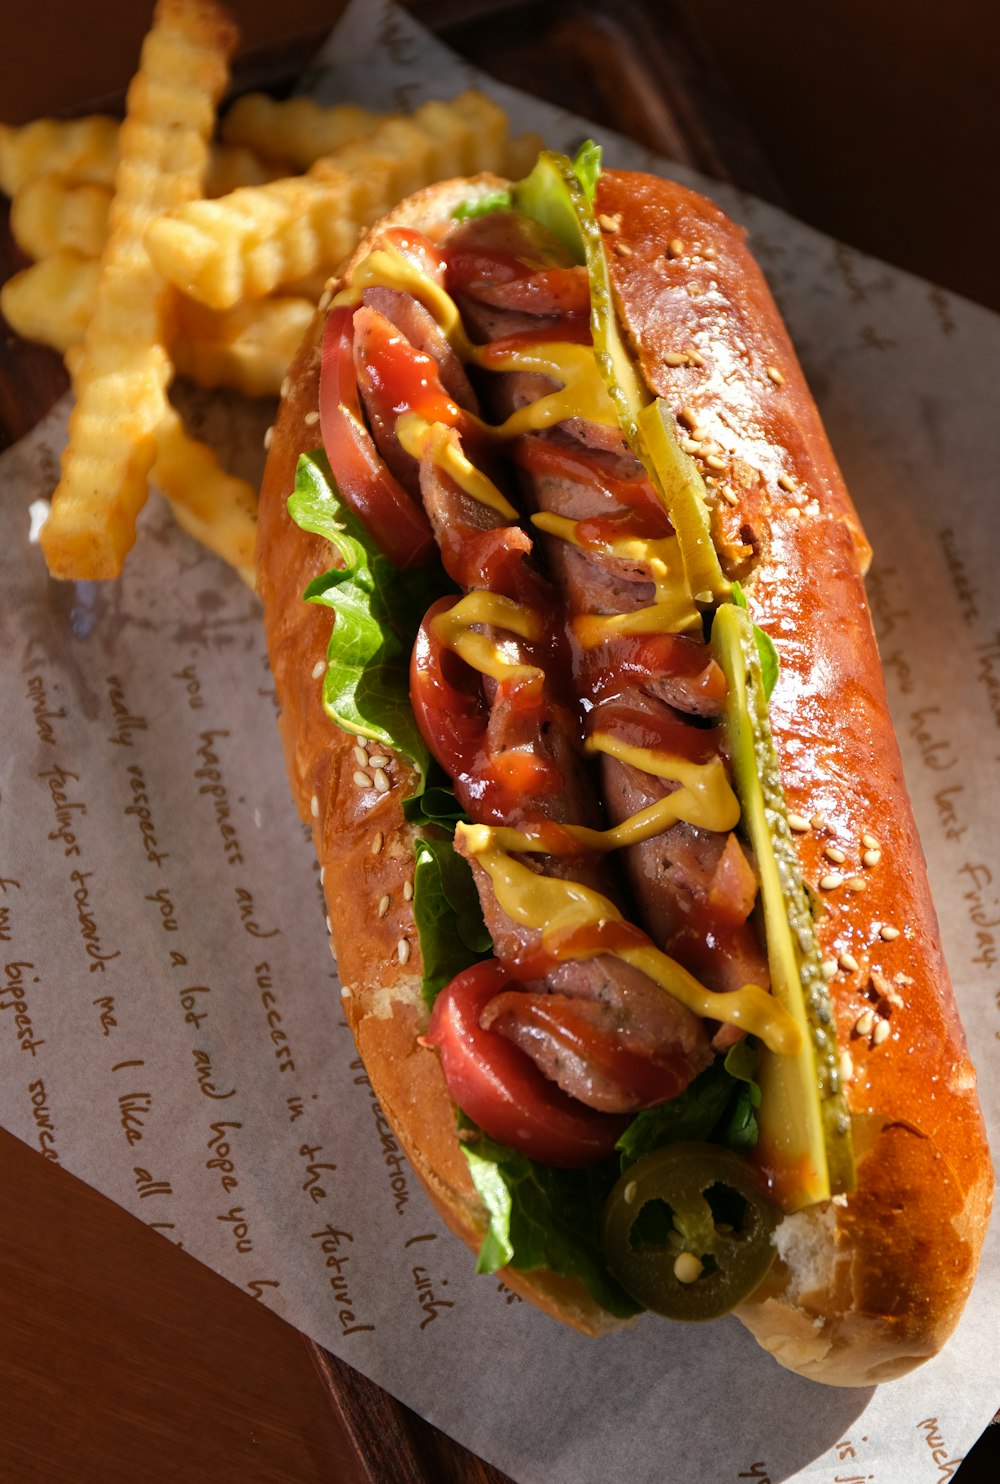 a hot dog on a bun with ketchup, mustard, and relish